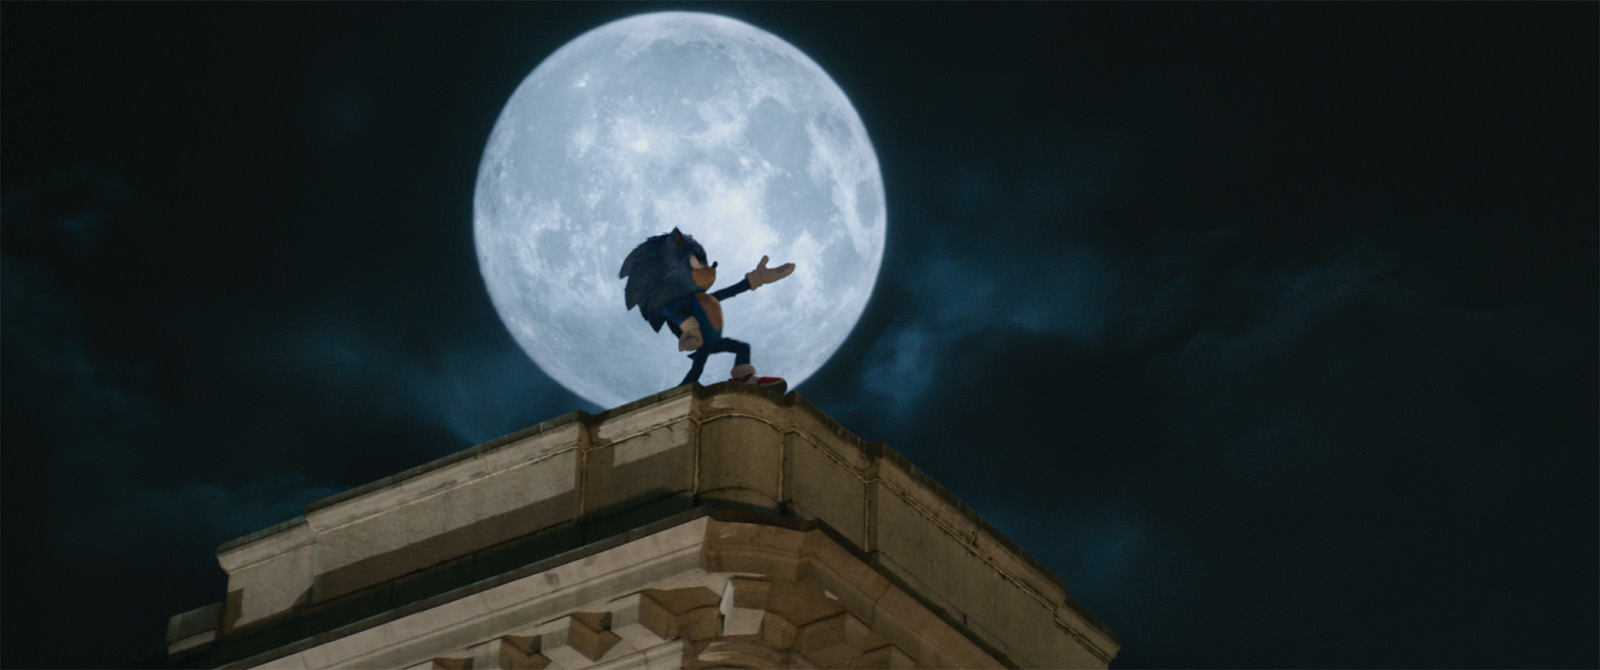 Szenenbild 5 vom Film Sonic The Hedgehog 2